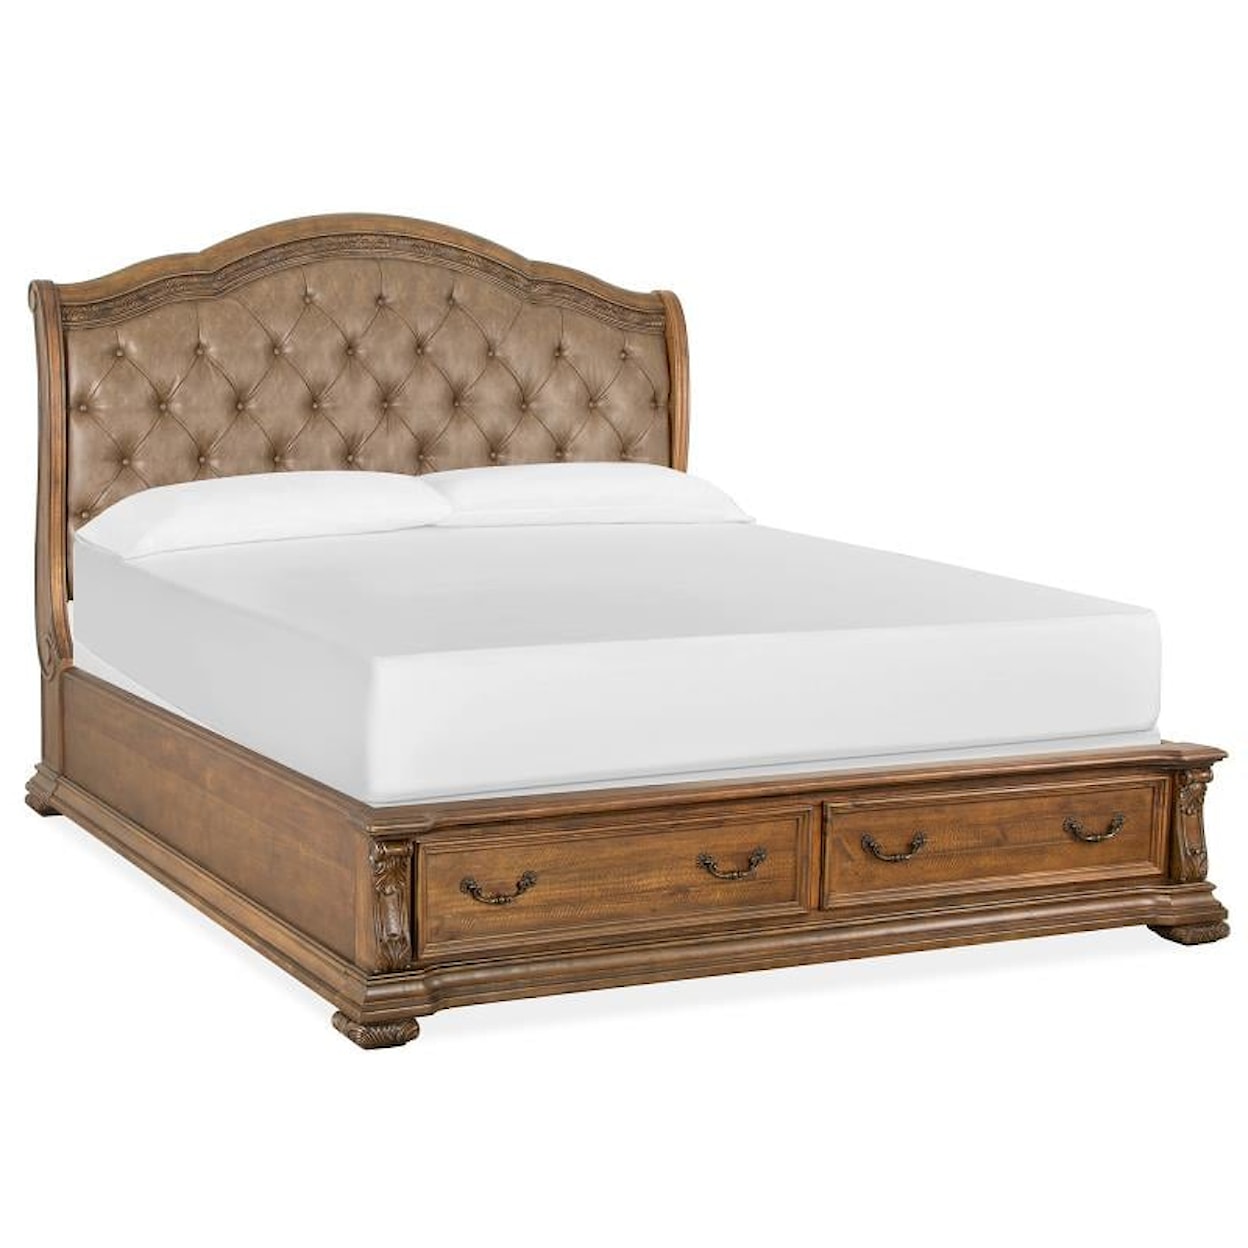 Magnussen Home Durango Bedroom King Upholstered Sleigh Bed